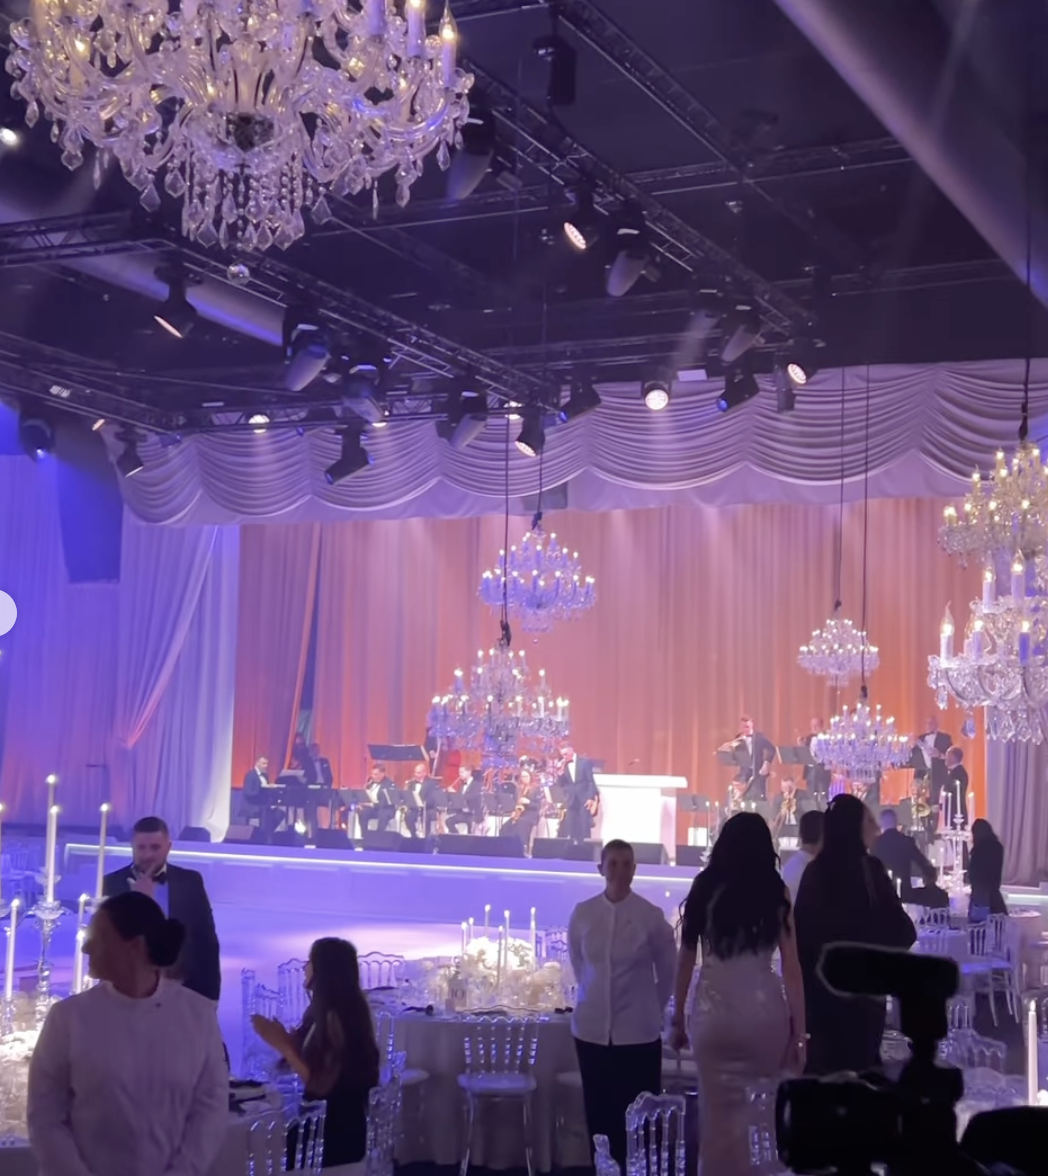 Scott Thomas shared a glimpse into the lavish black tie wedding reception of PrettyLittleThing founder Umar Kamani